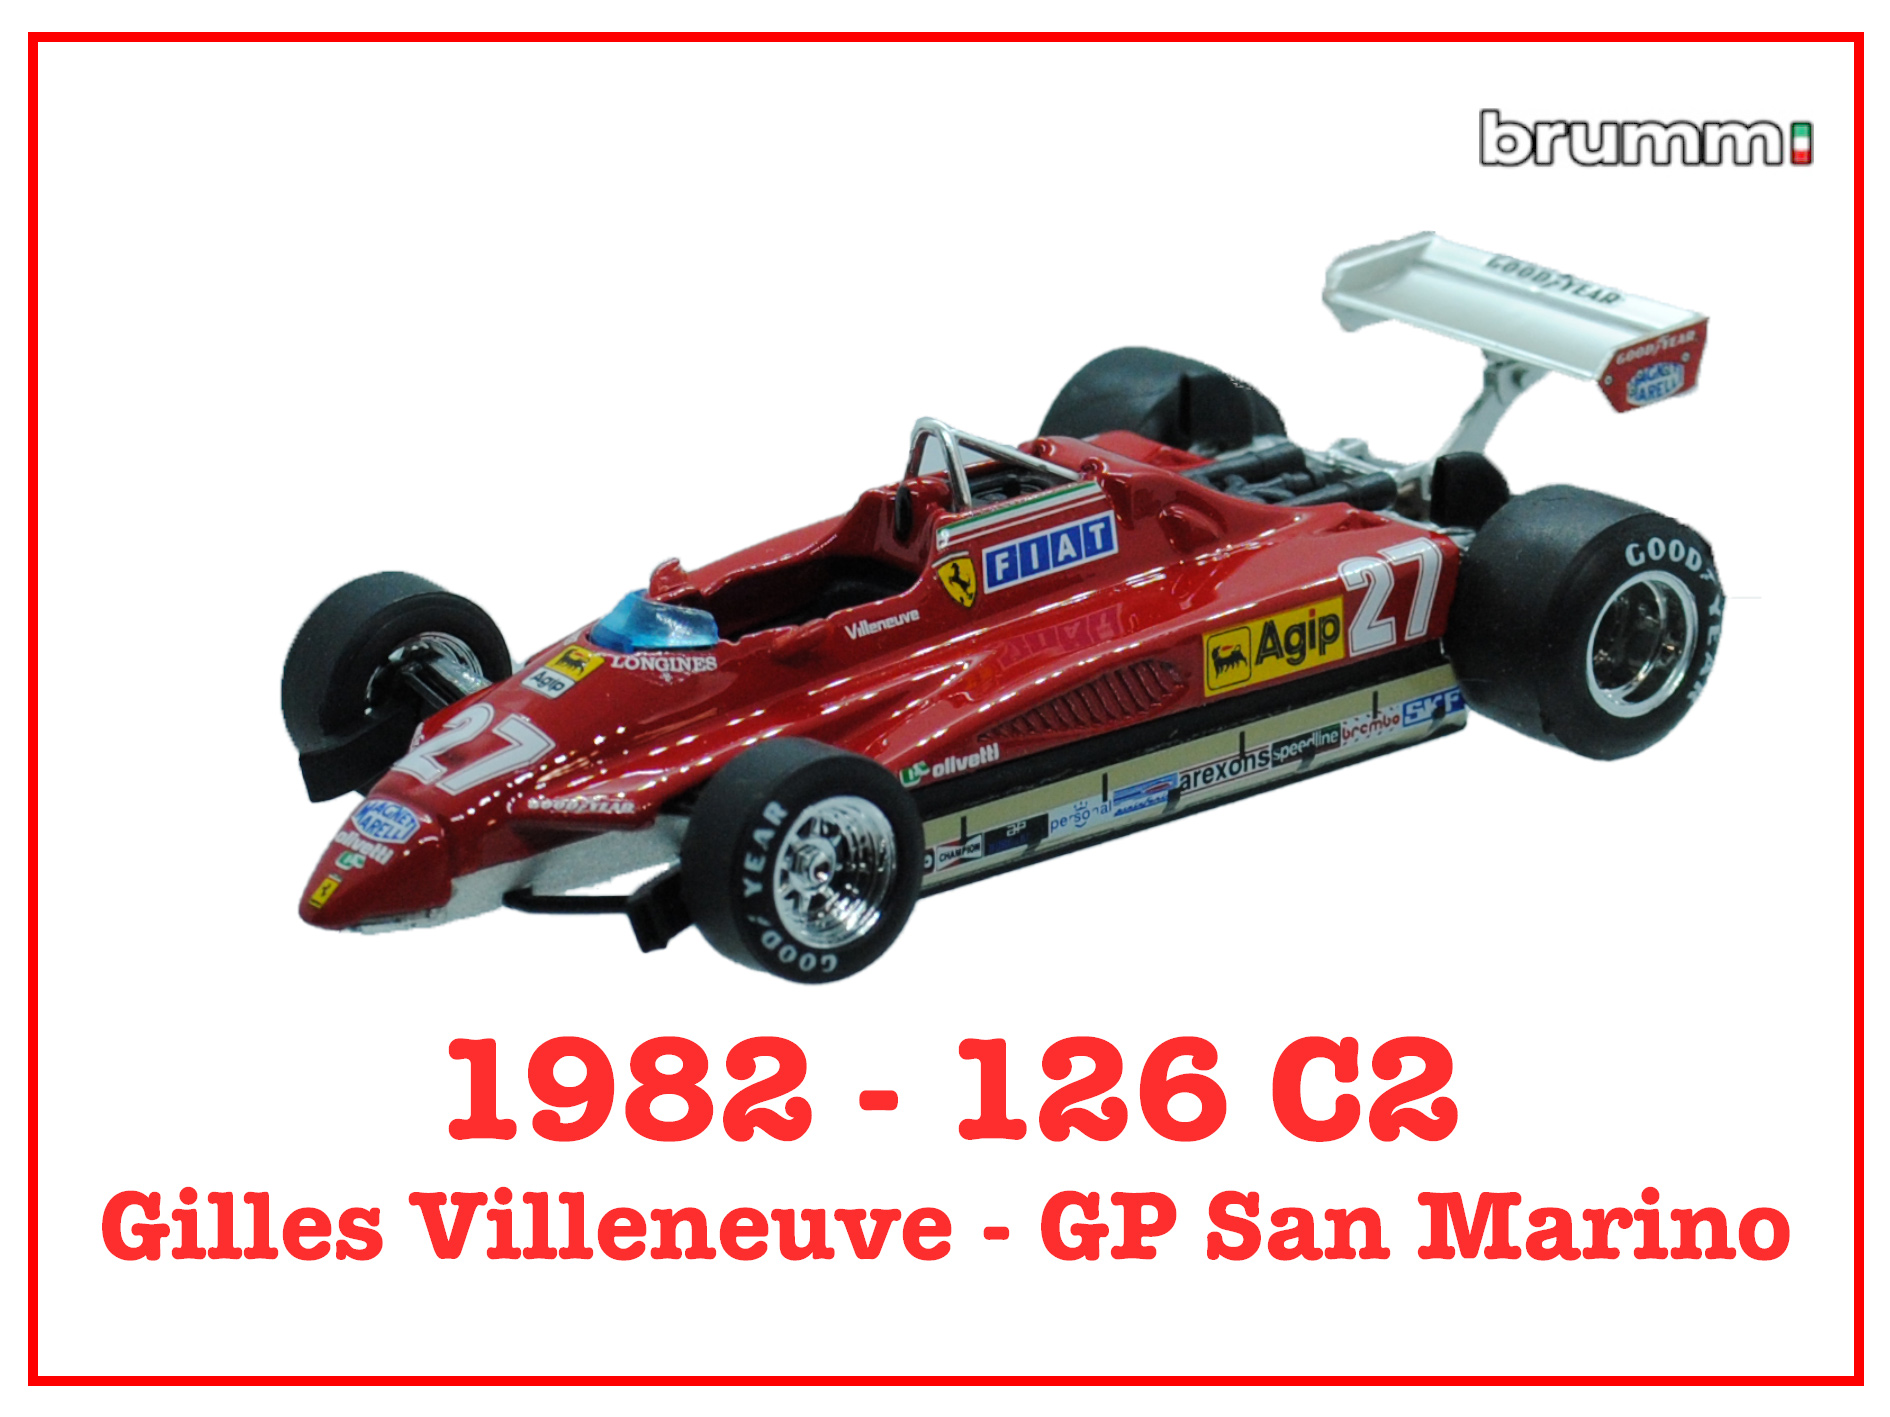 Immagine 126 C2 - Gilles Villeneuve GP San Marino